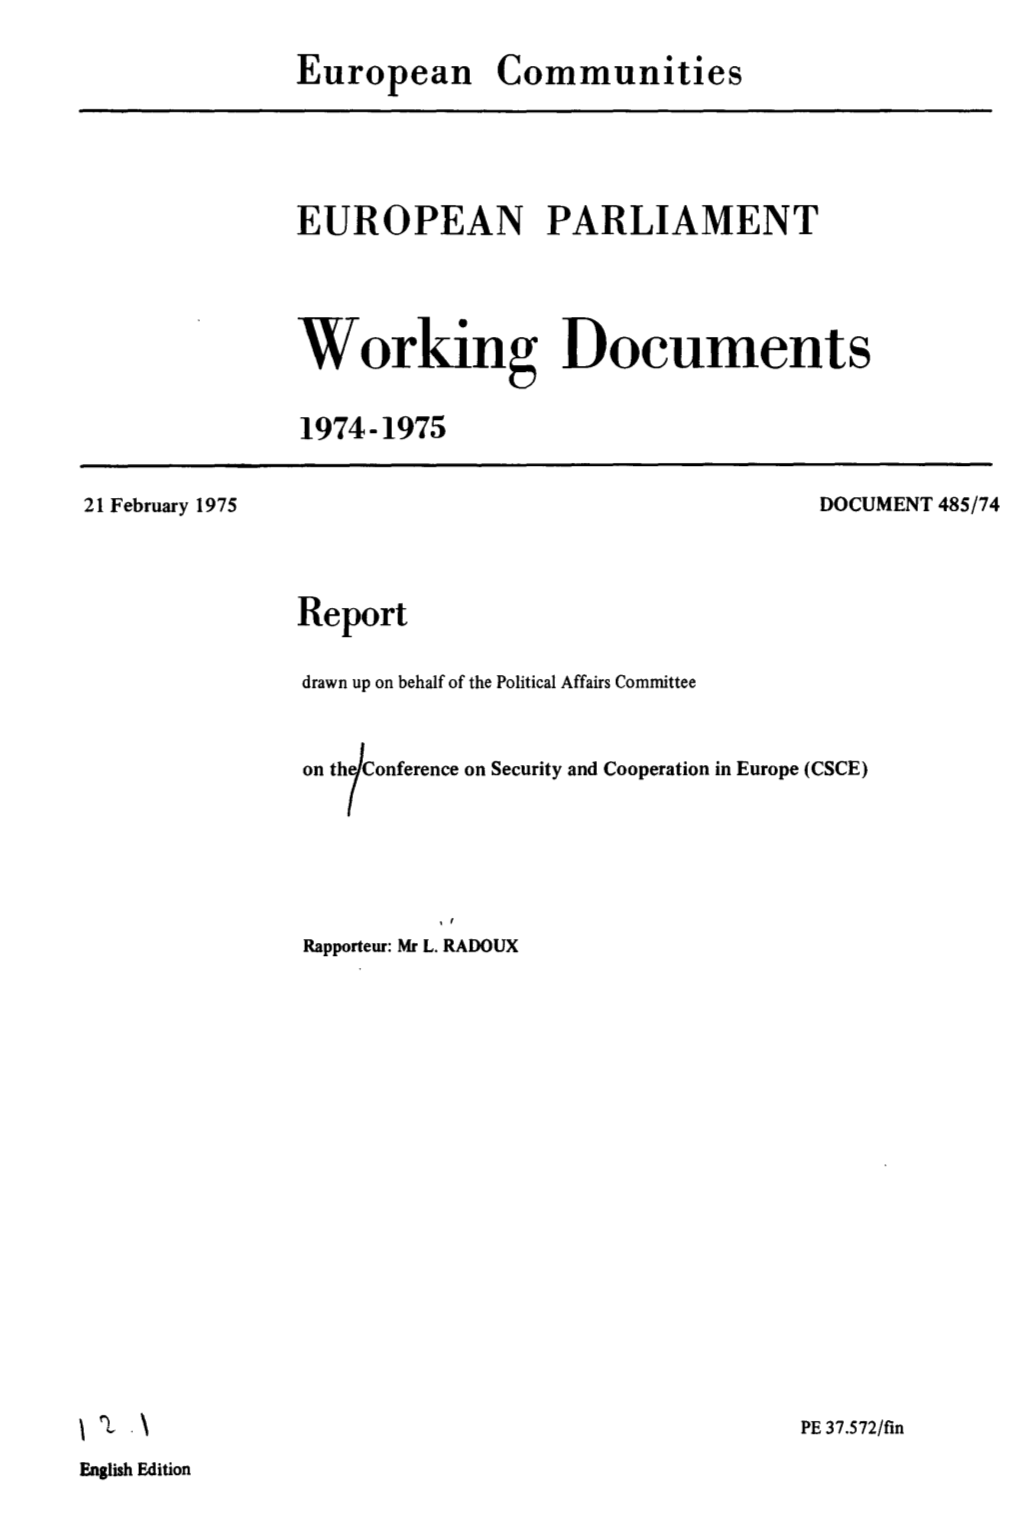 Working Documents 1.18RAR1